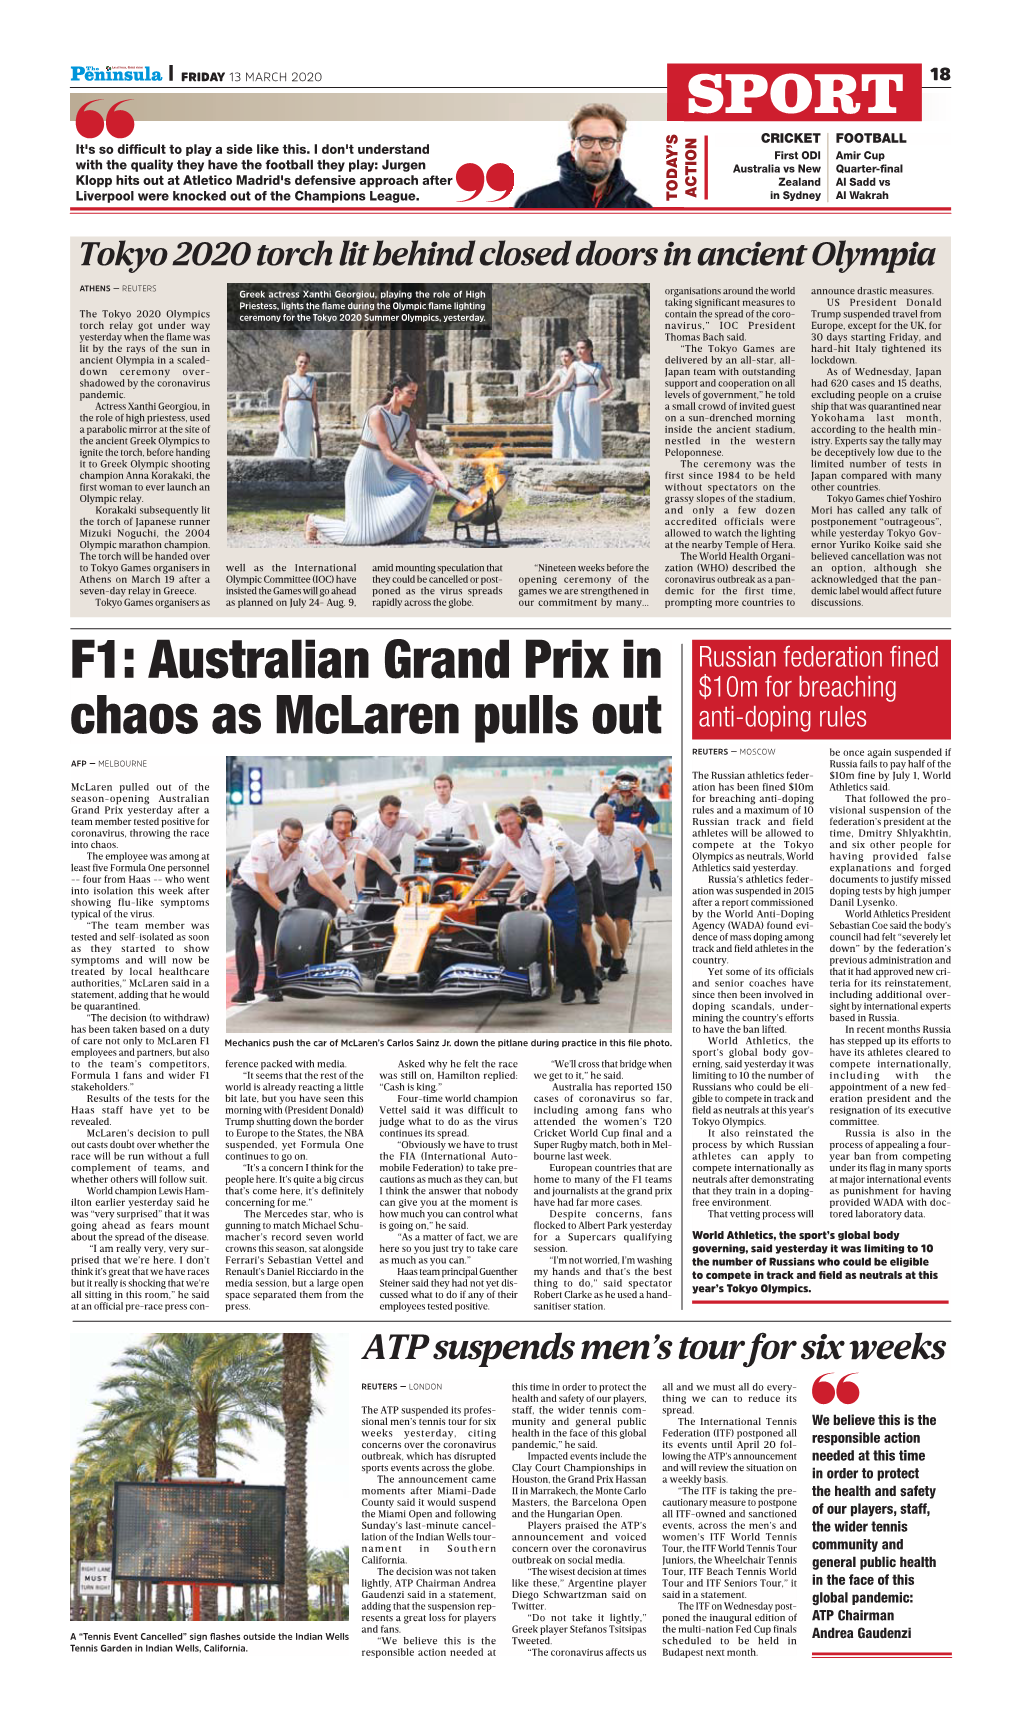 Australian Grand Prix in Chaos As Mclaren